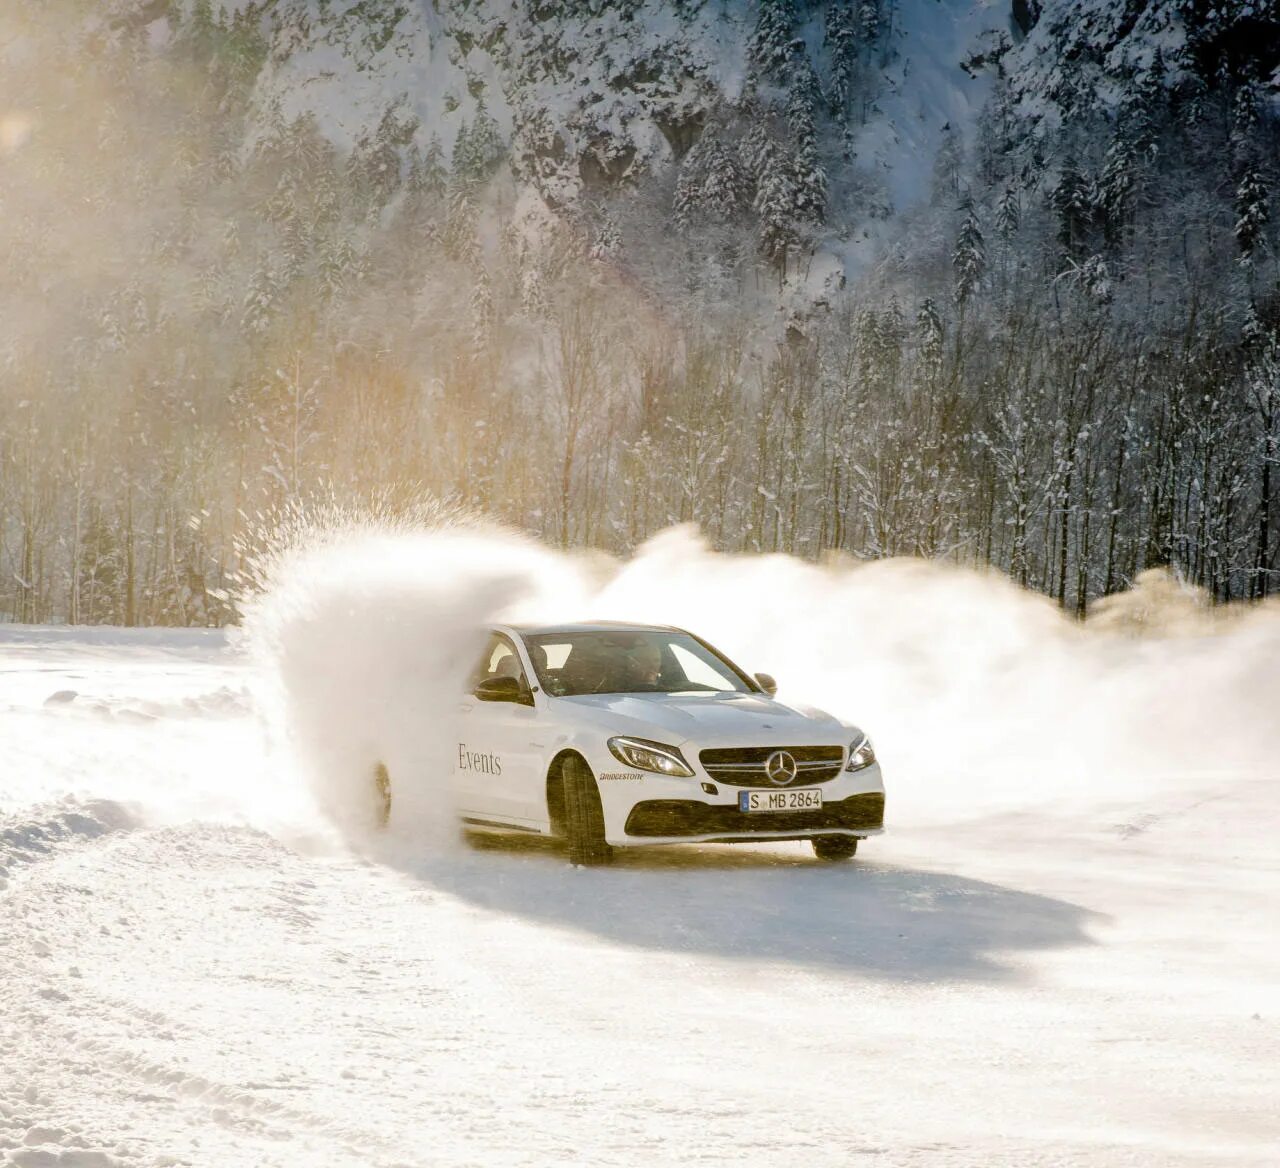 Drifting snow. Машина зимой. Машина в снегу. Зим автомобиль. Машина в заносе.